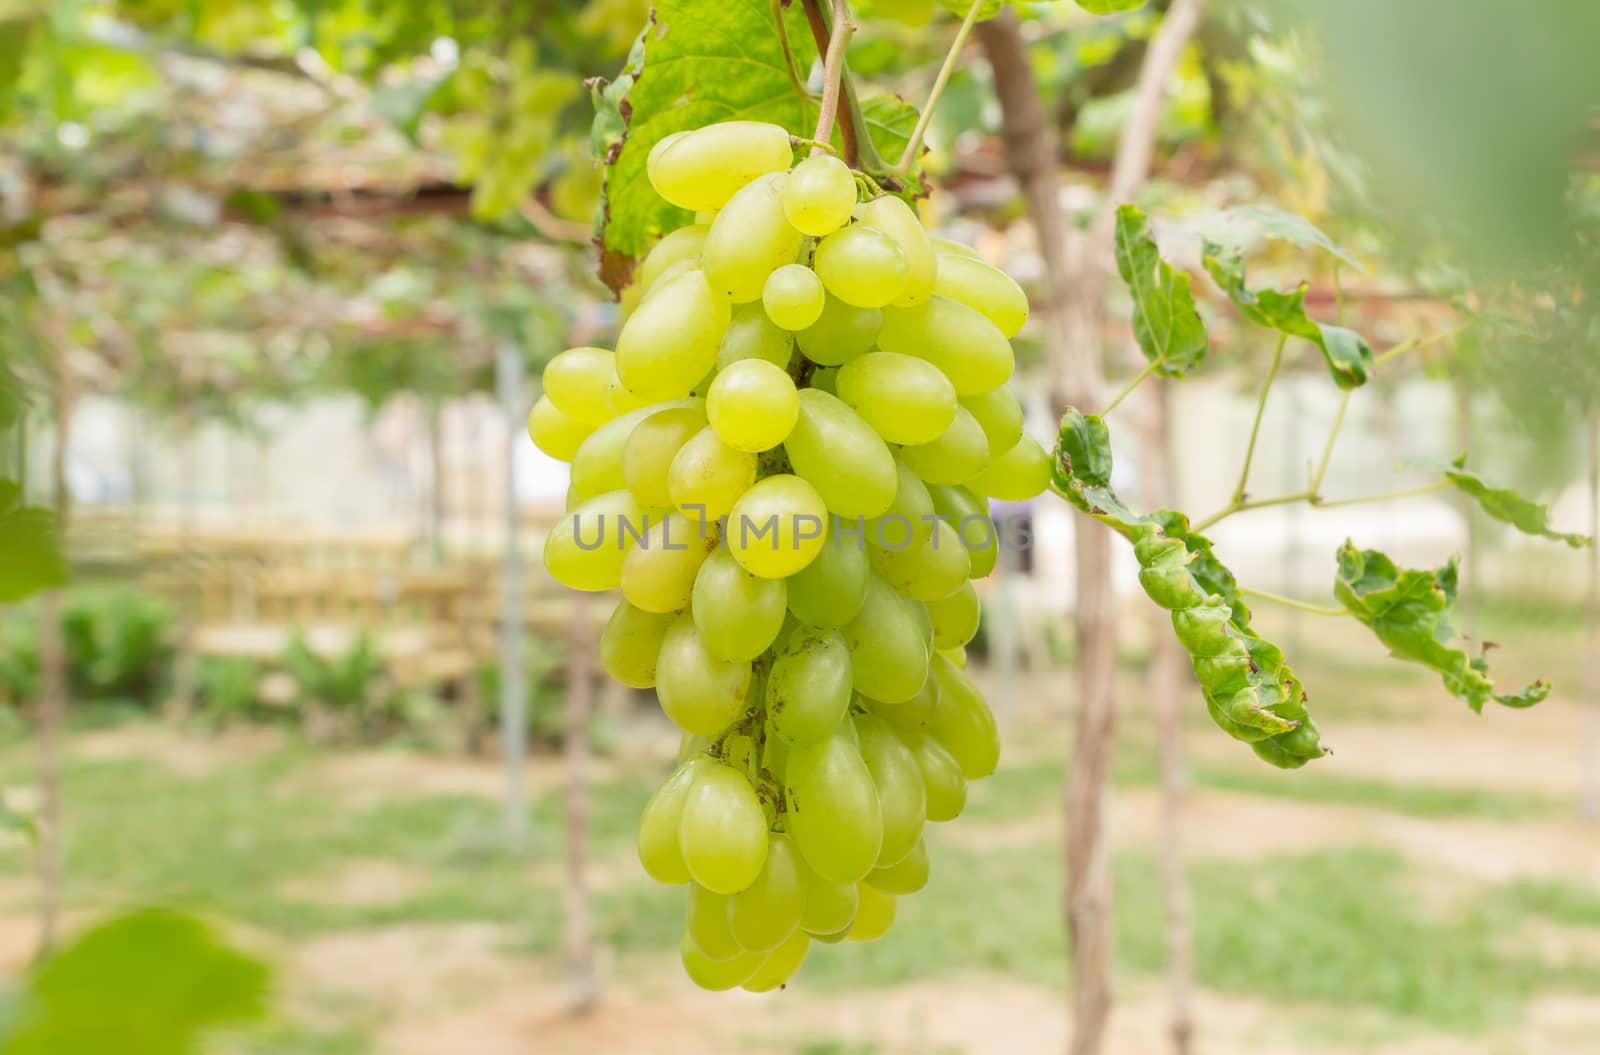 Green grapes in grape garden or vineyard. Green grapes with green leaf. Green grape vineyard in sunshine day. Ripe green grape for health or diet center or frame